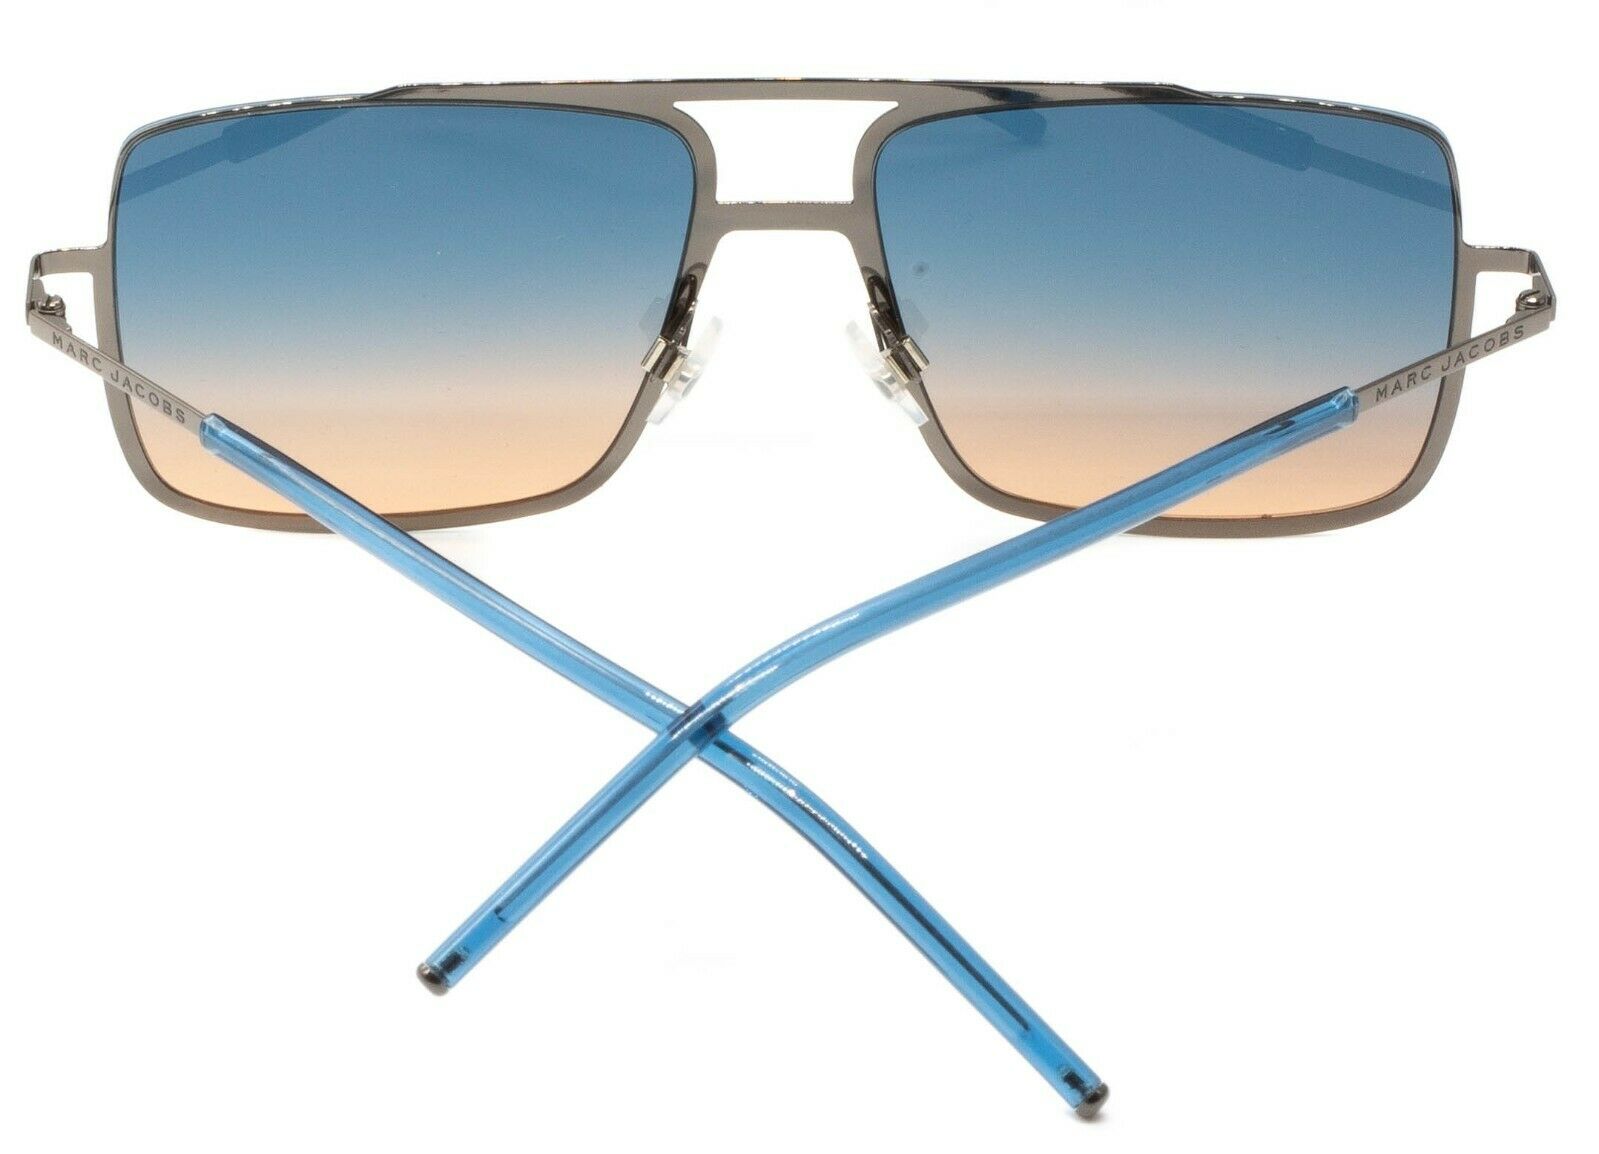 MARC JACOBS MARC 35/S TLZOV 55mm Sunglasses Shades FRAMES Glasses Eyeglasses New